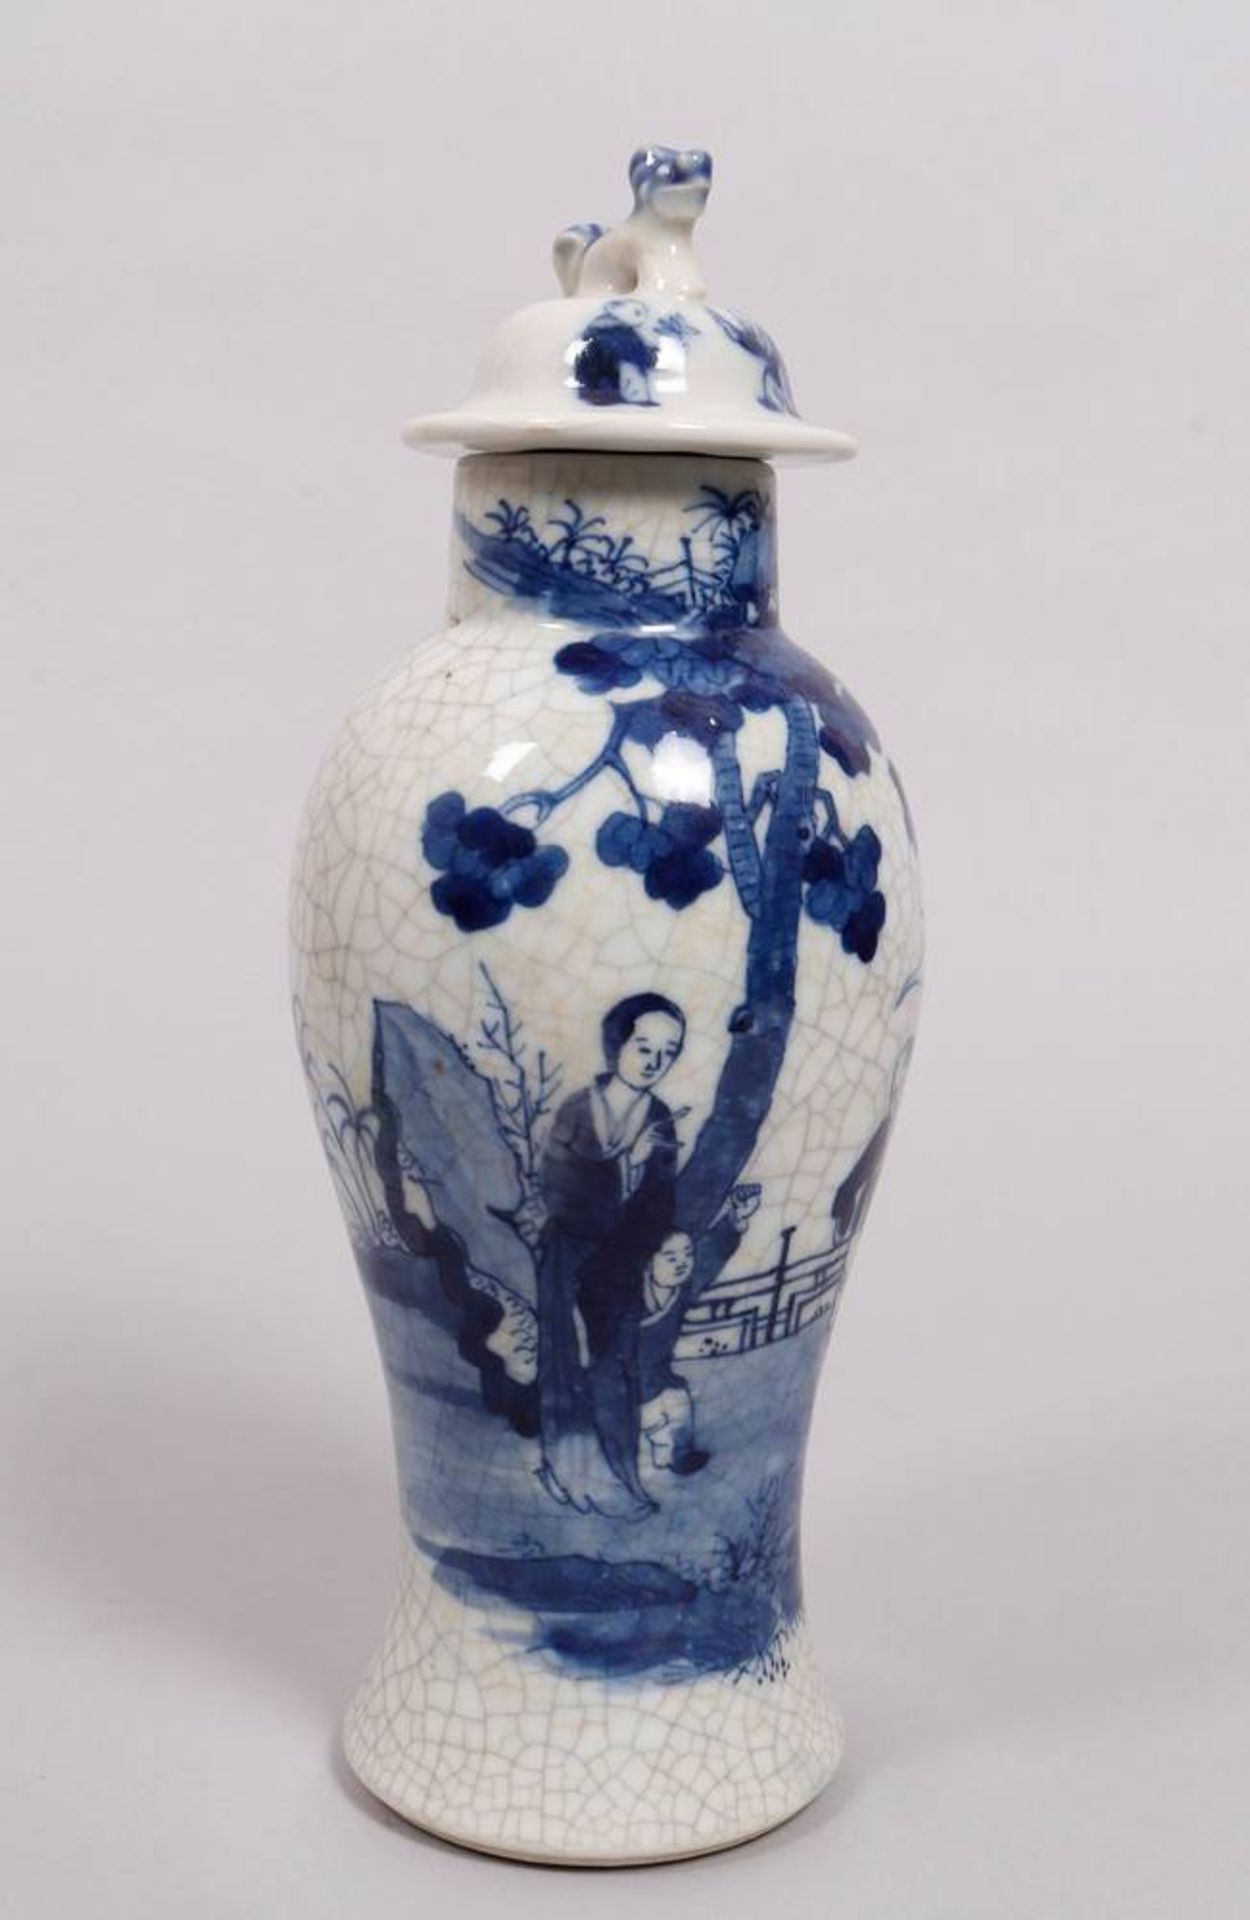 Lidded vase, China, probably Republic period